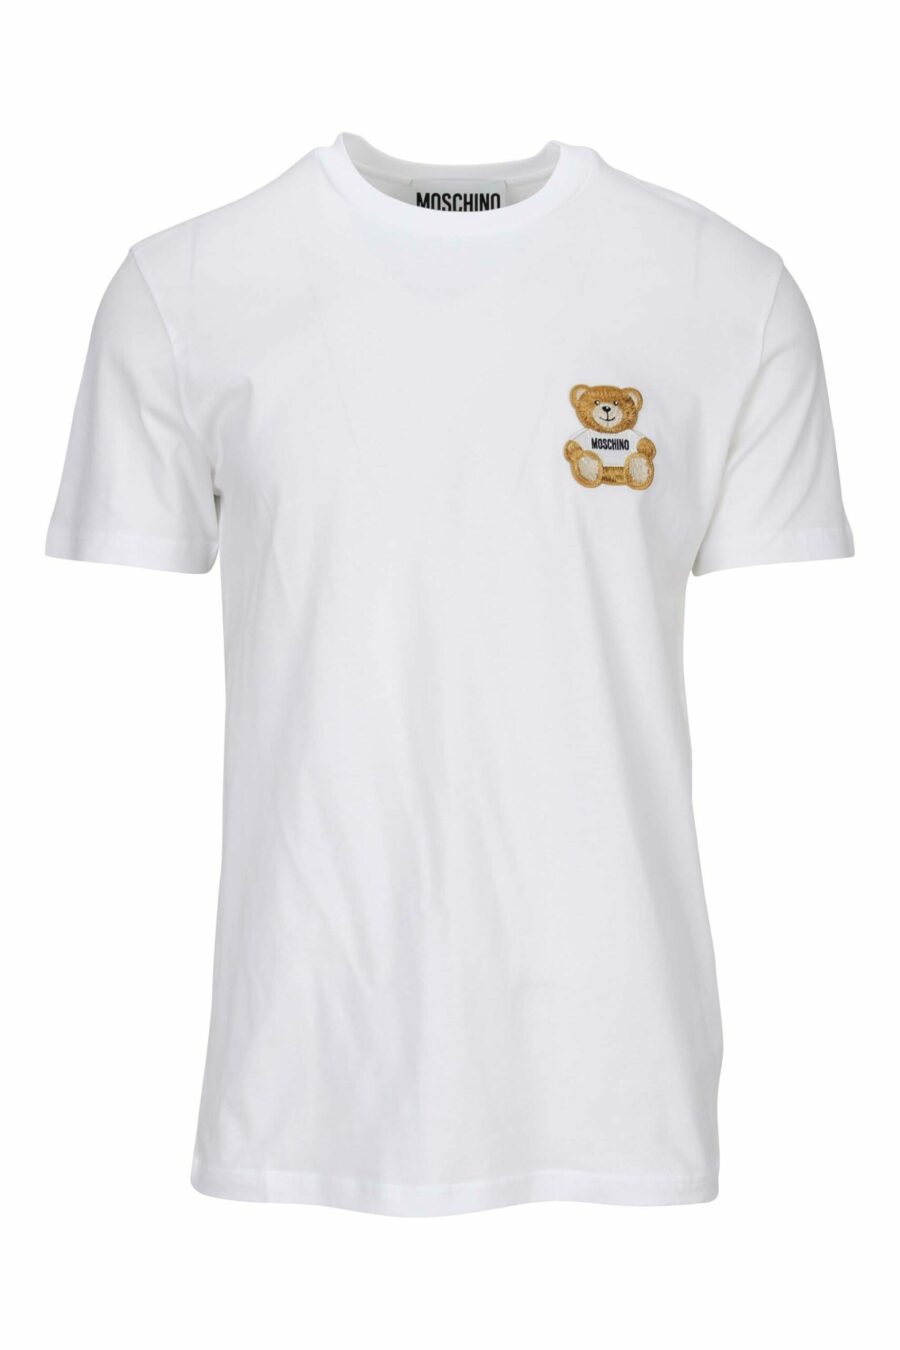 T-shirt blanc avec minilogue "teddy" brodé - 667113455334 scaled